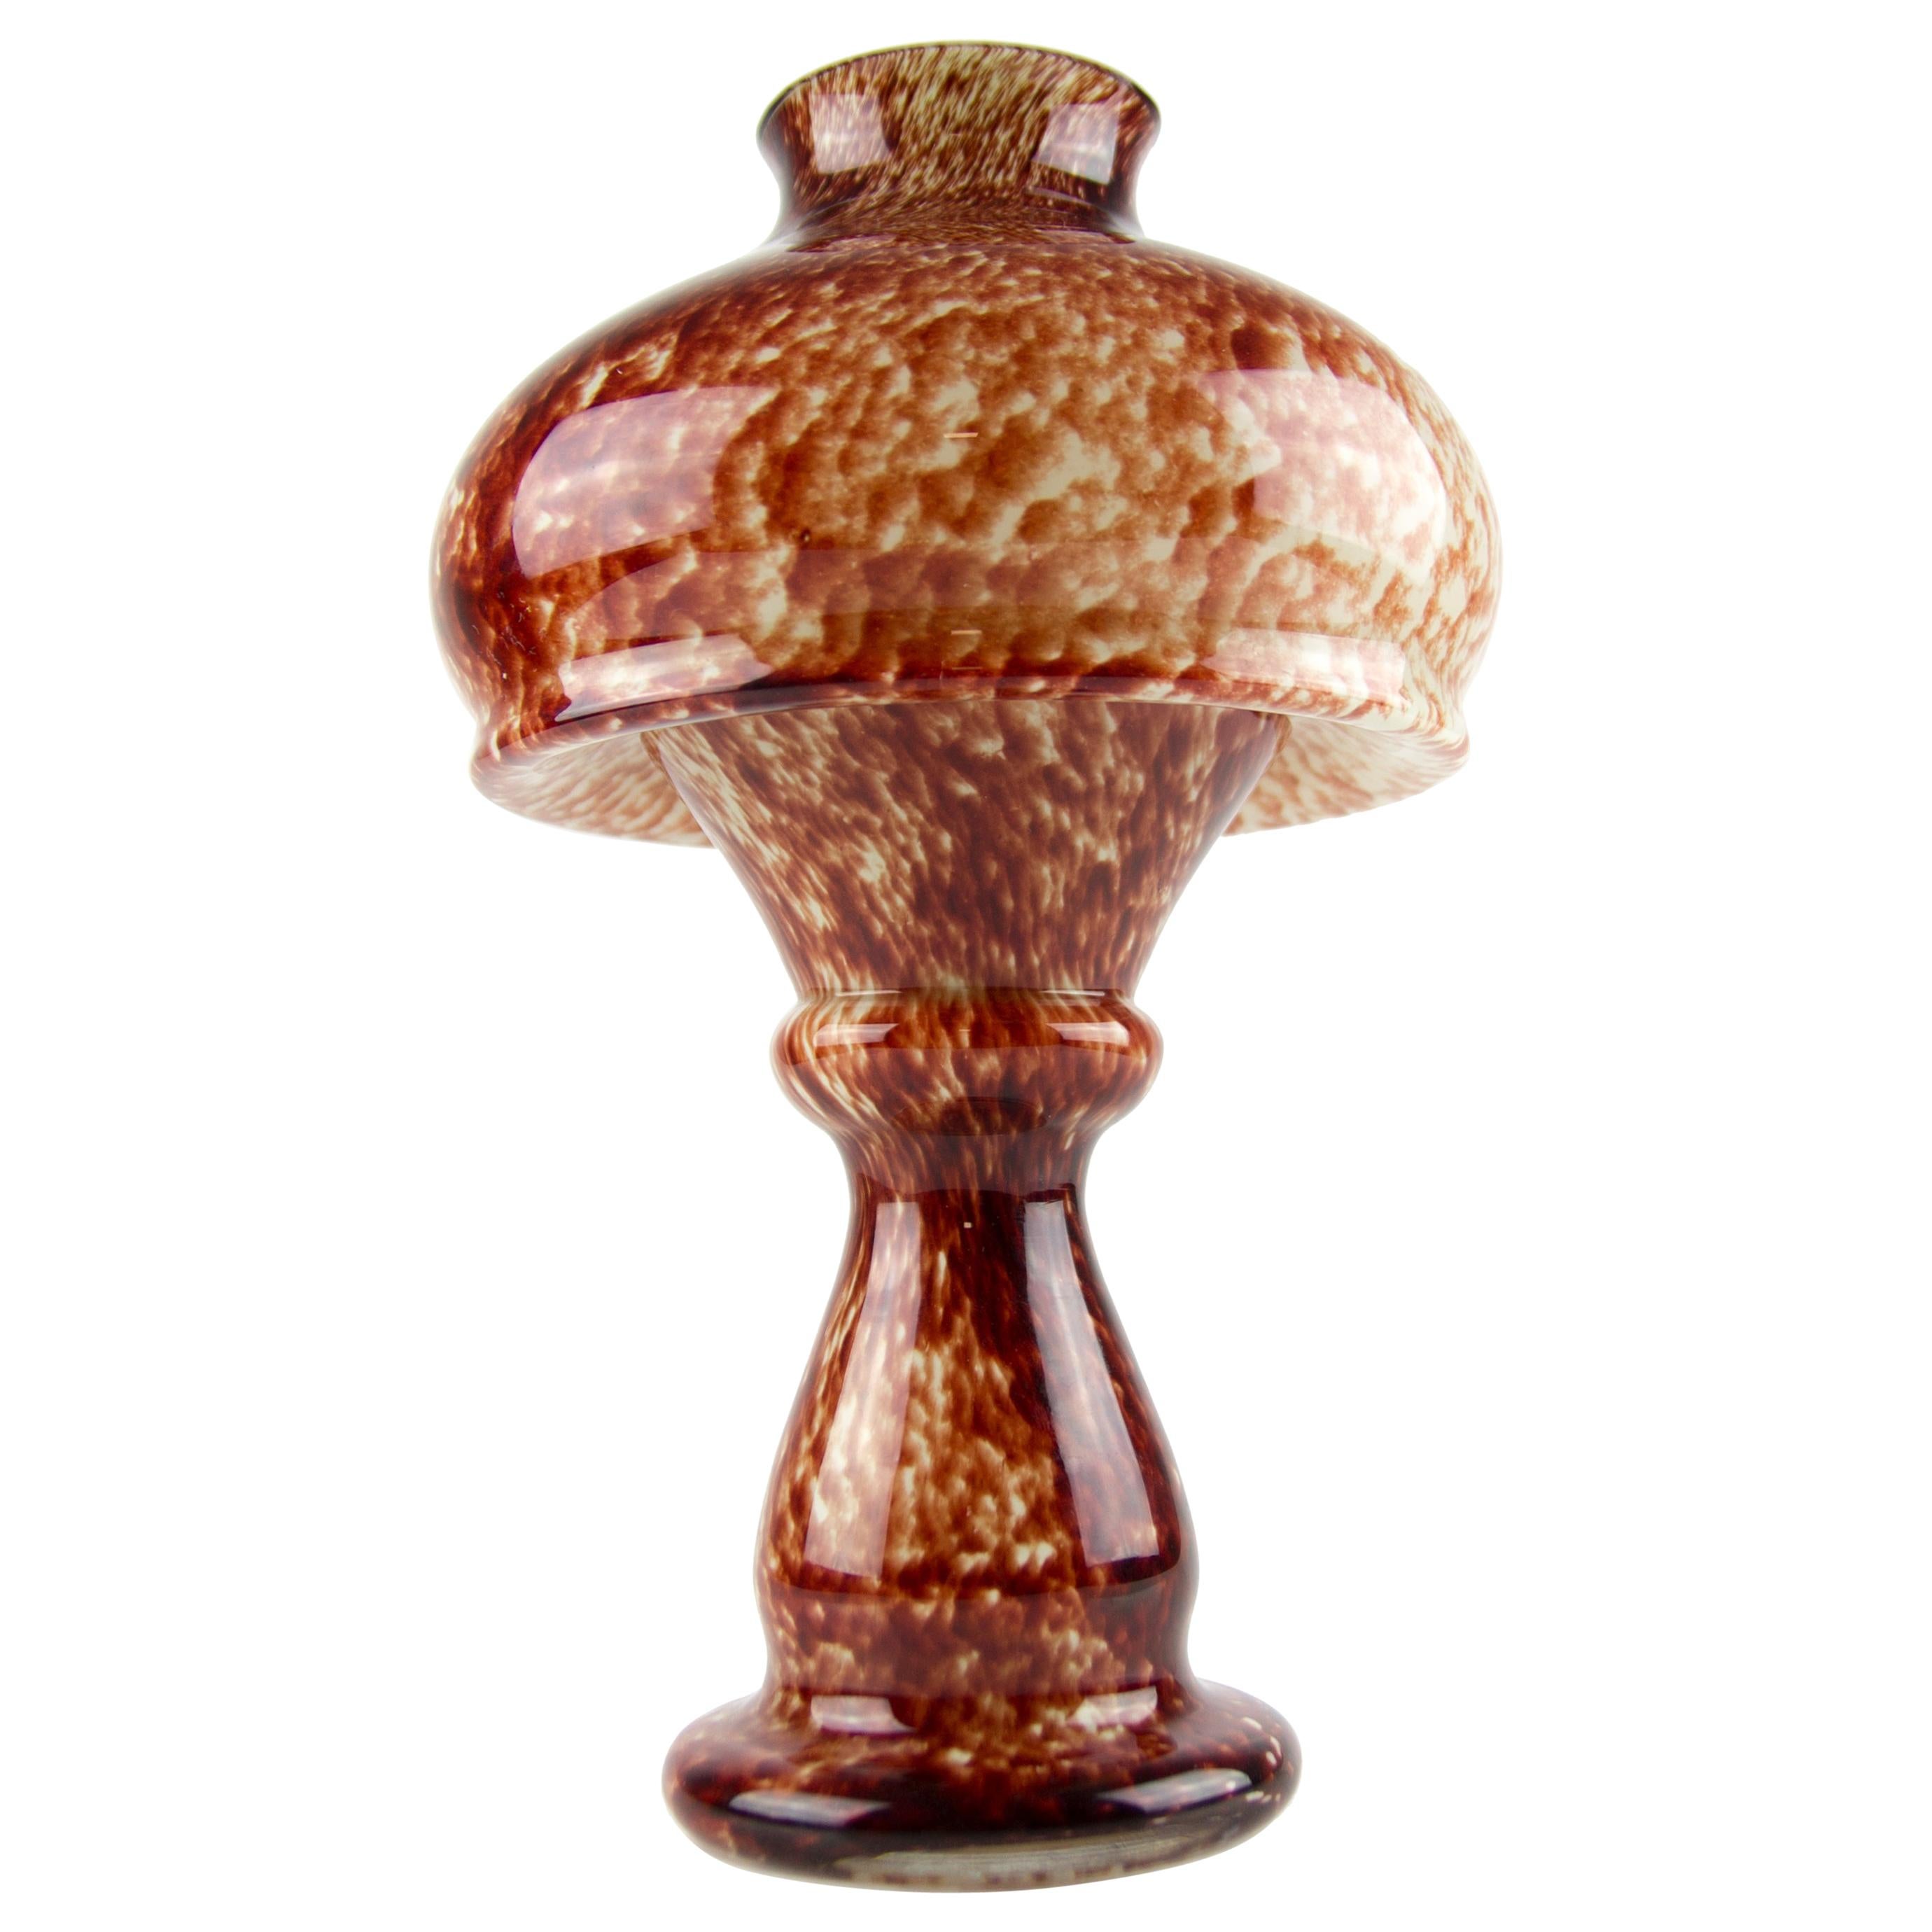 Vintage Pilz-förmigen roten Kunstglas Teelichthalter oder Kerze Lampe oder Vase